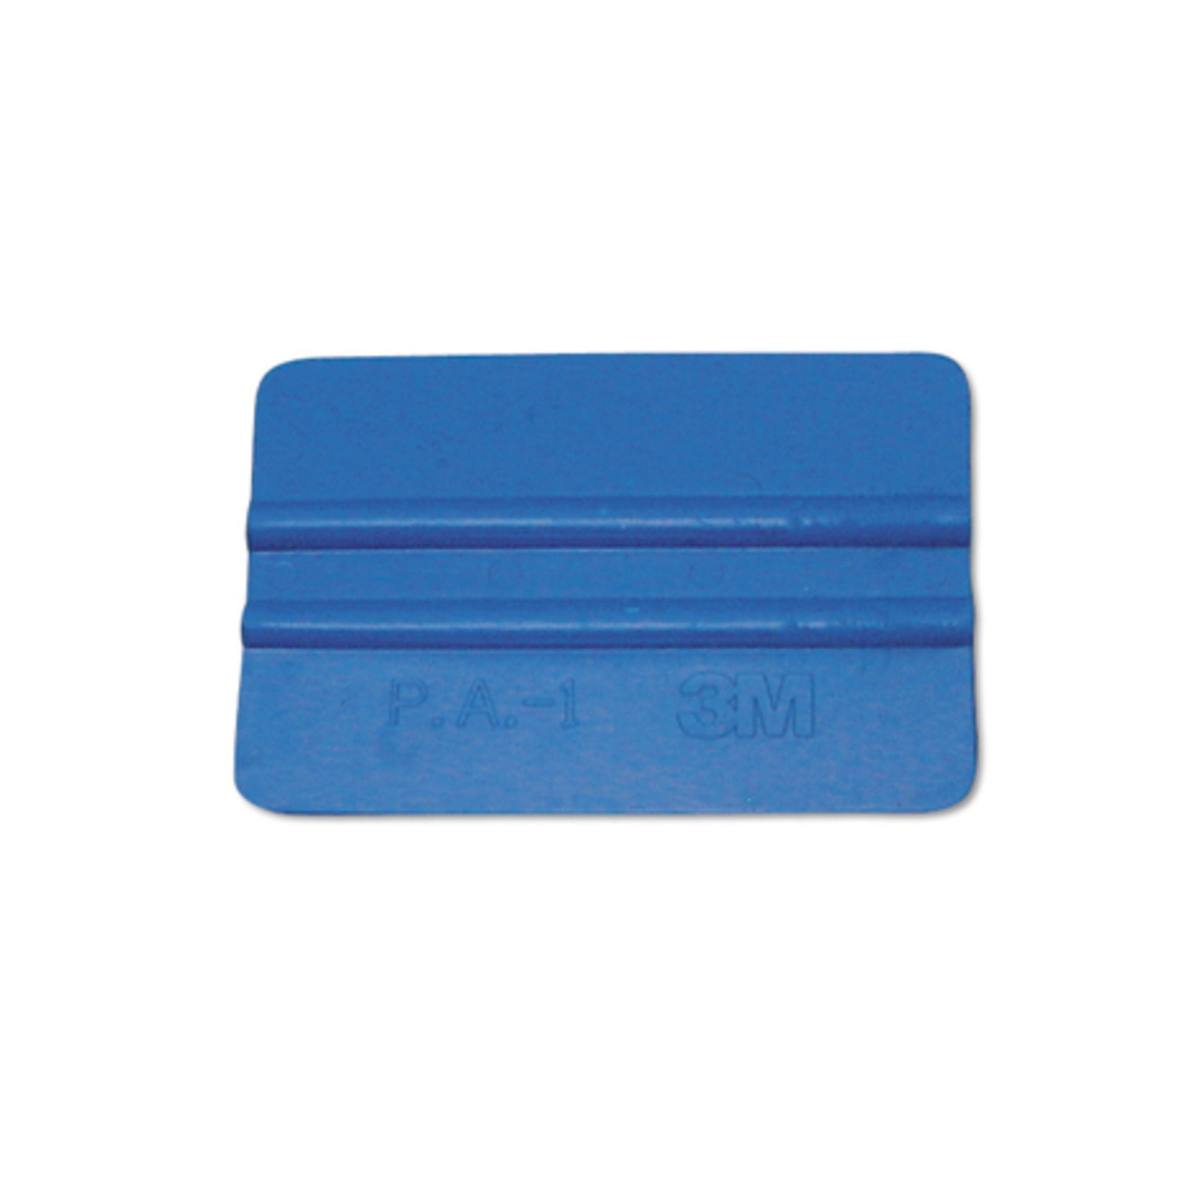 3M plastic squeegee, light blue, soft, 100mmx70mm, P.A.-1